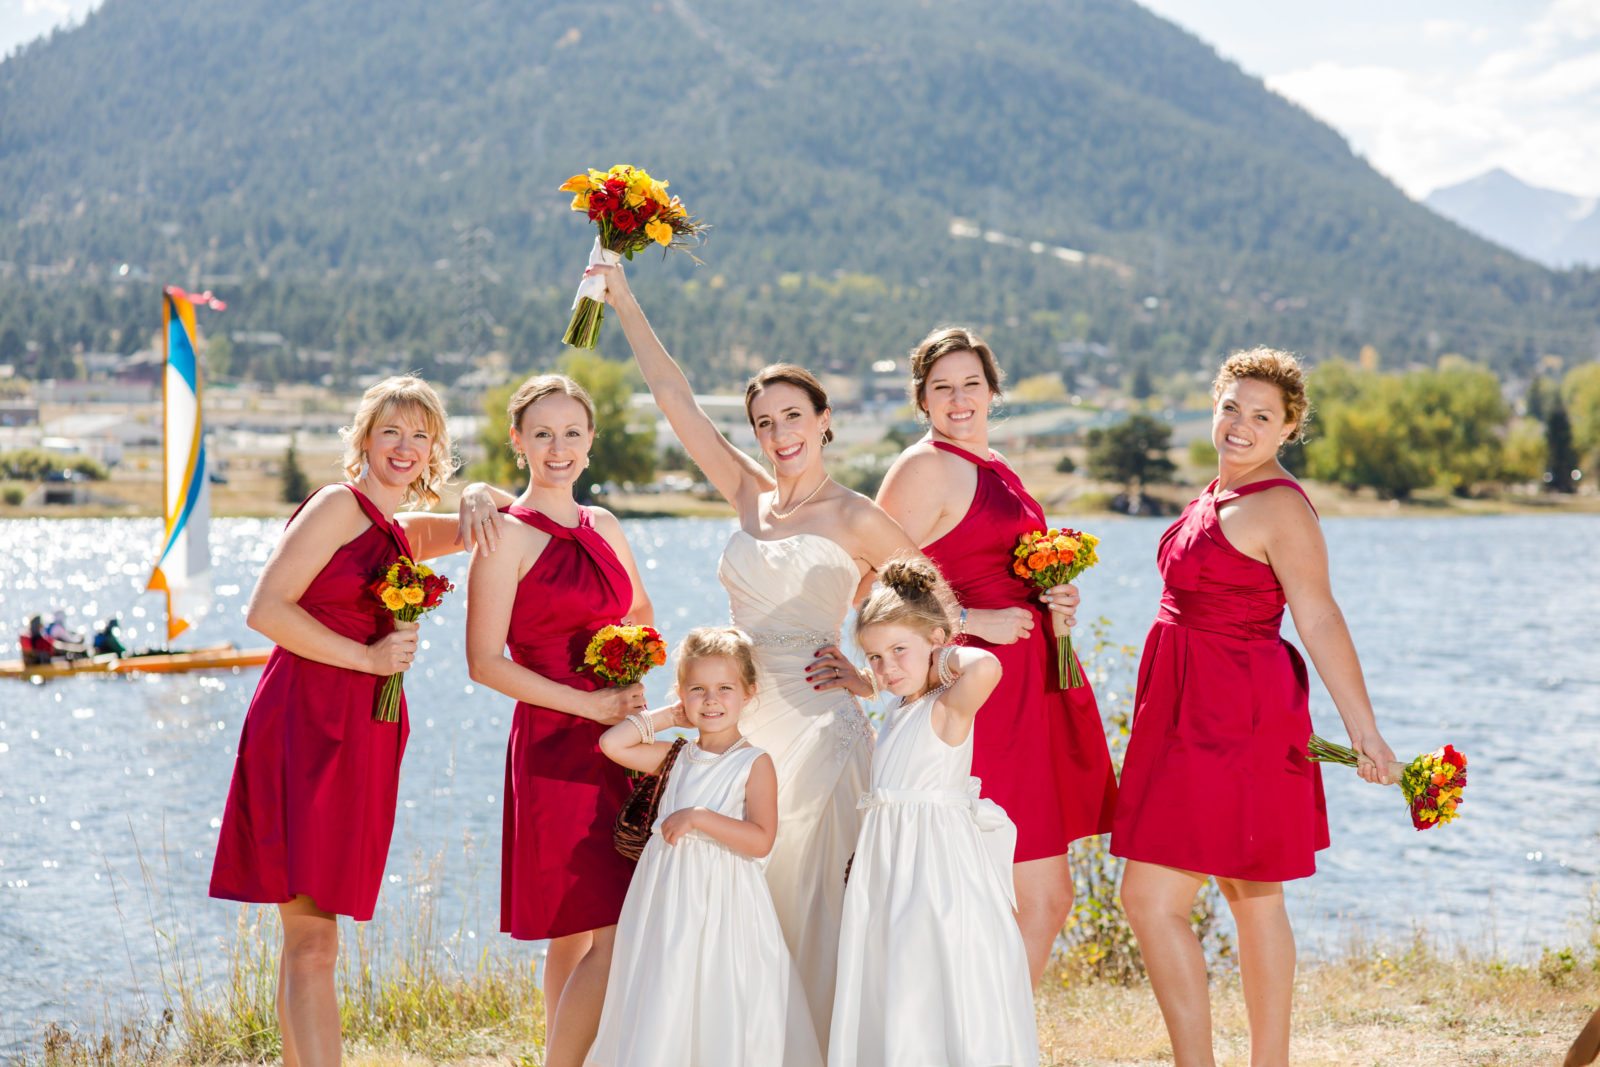 Fall estes park wedding with bride and bridesmaids